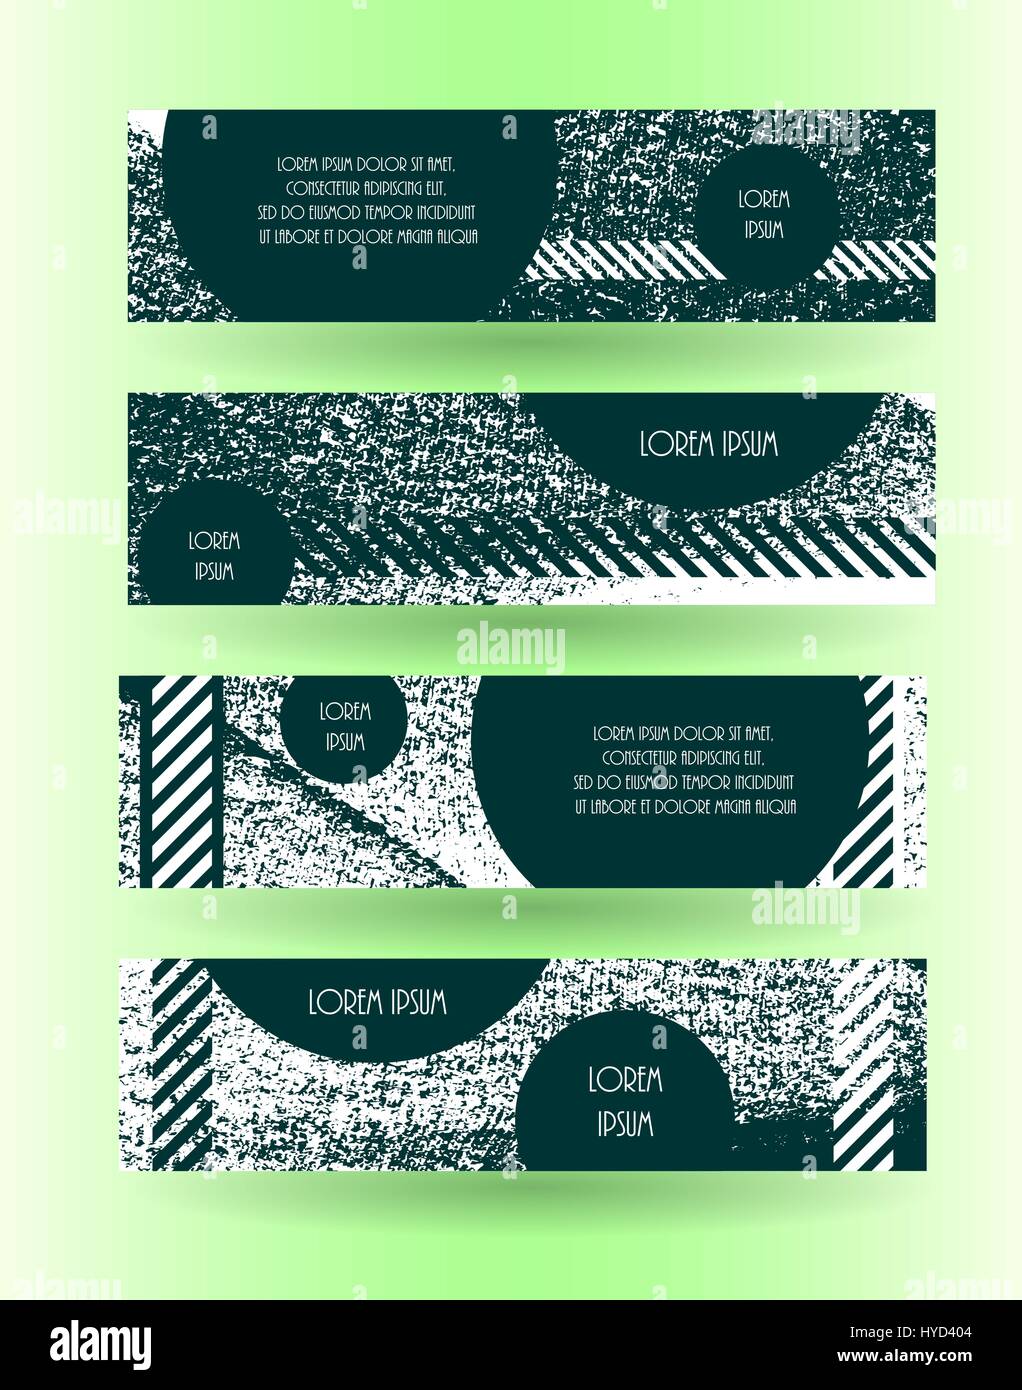 Grunge-Stil-horizontale Layout-Banner-Set. Abstrakte Header Sammlung. Grün-Vektor-Illustration. Website-Design-Elemente. Stock Vektor